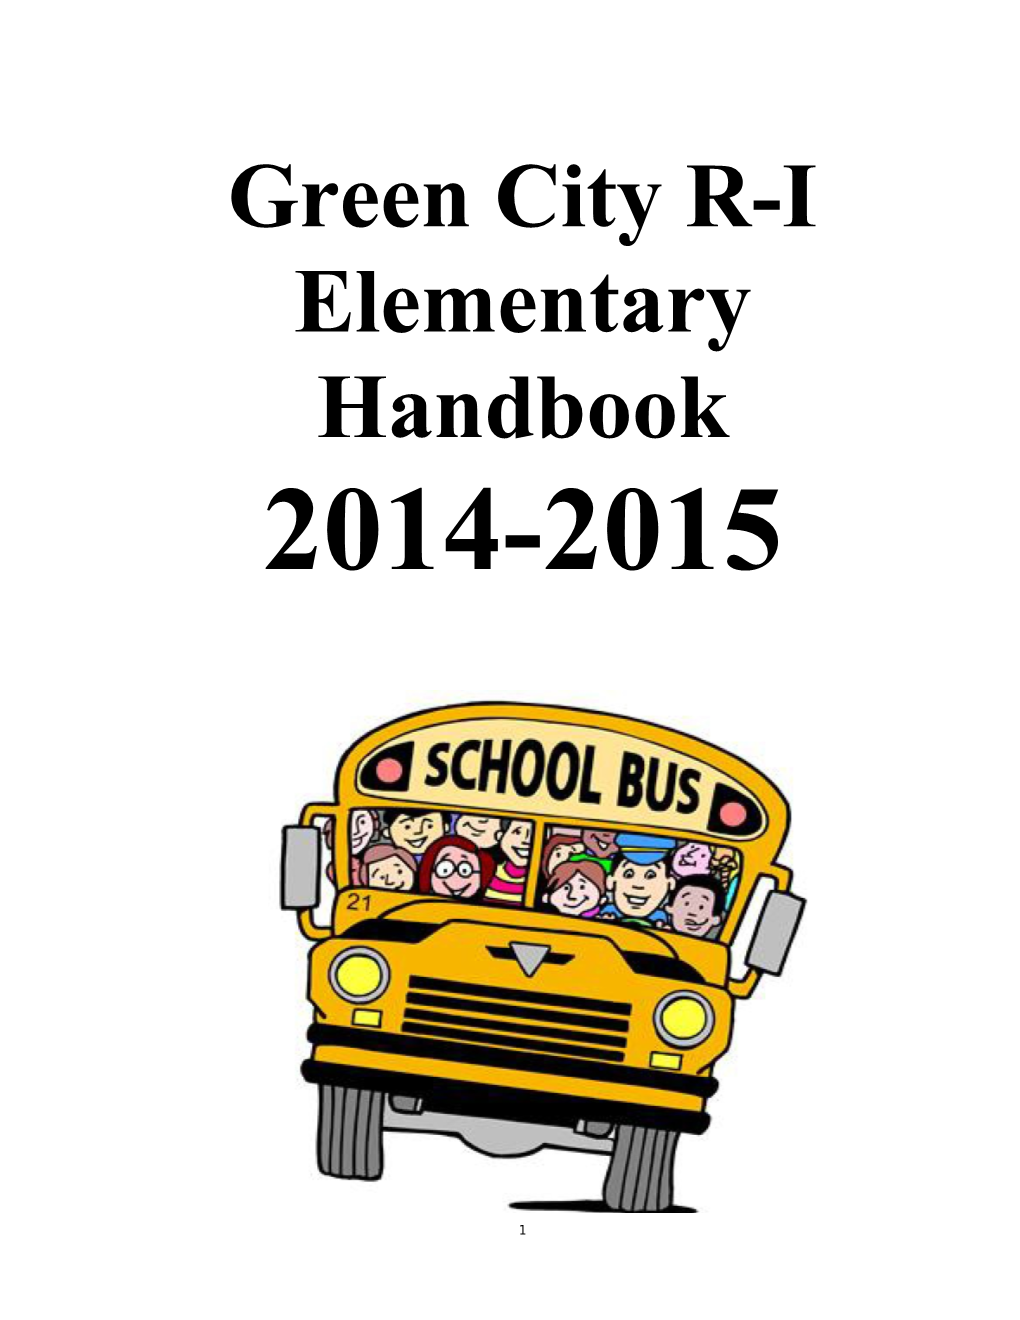 Green City R-I Elementary